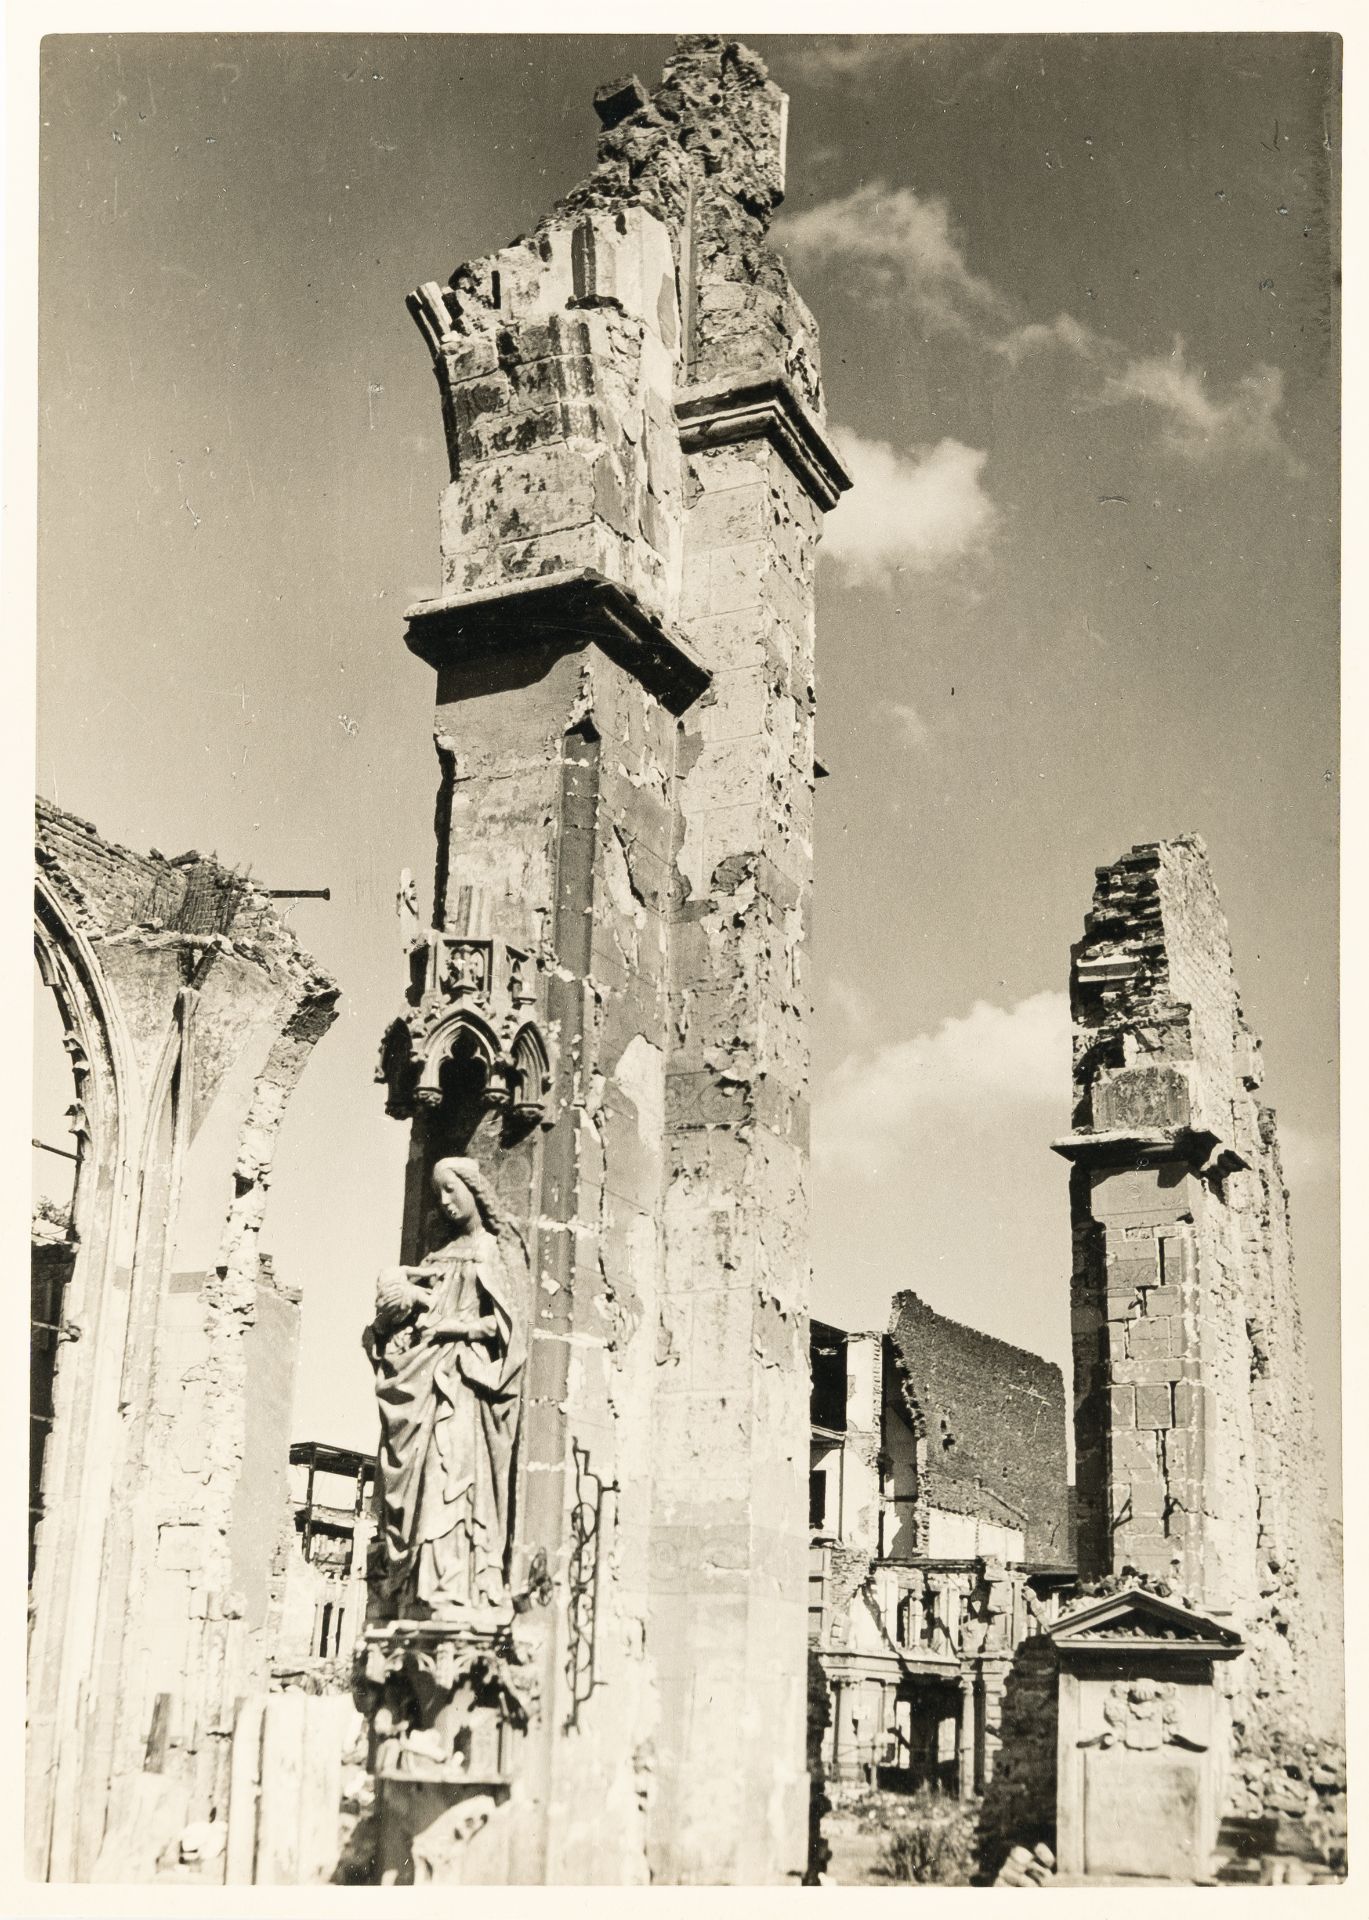 Robert Seuffert, The Virgin among the rubble.Vintage gelatin silver print on photo paper. (19)42.